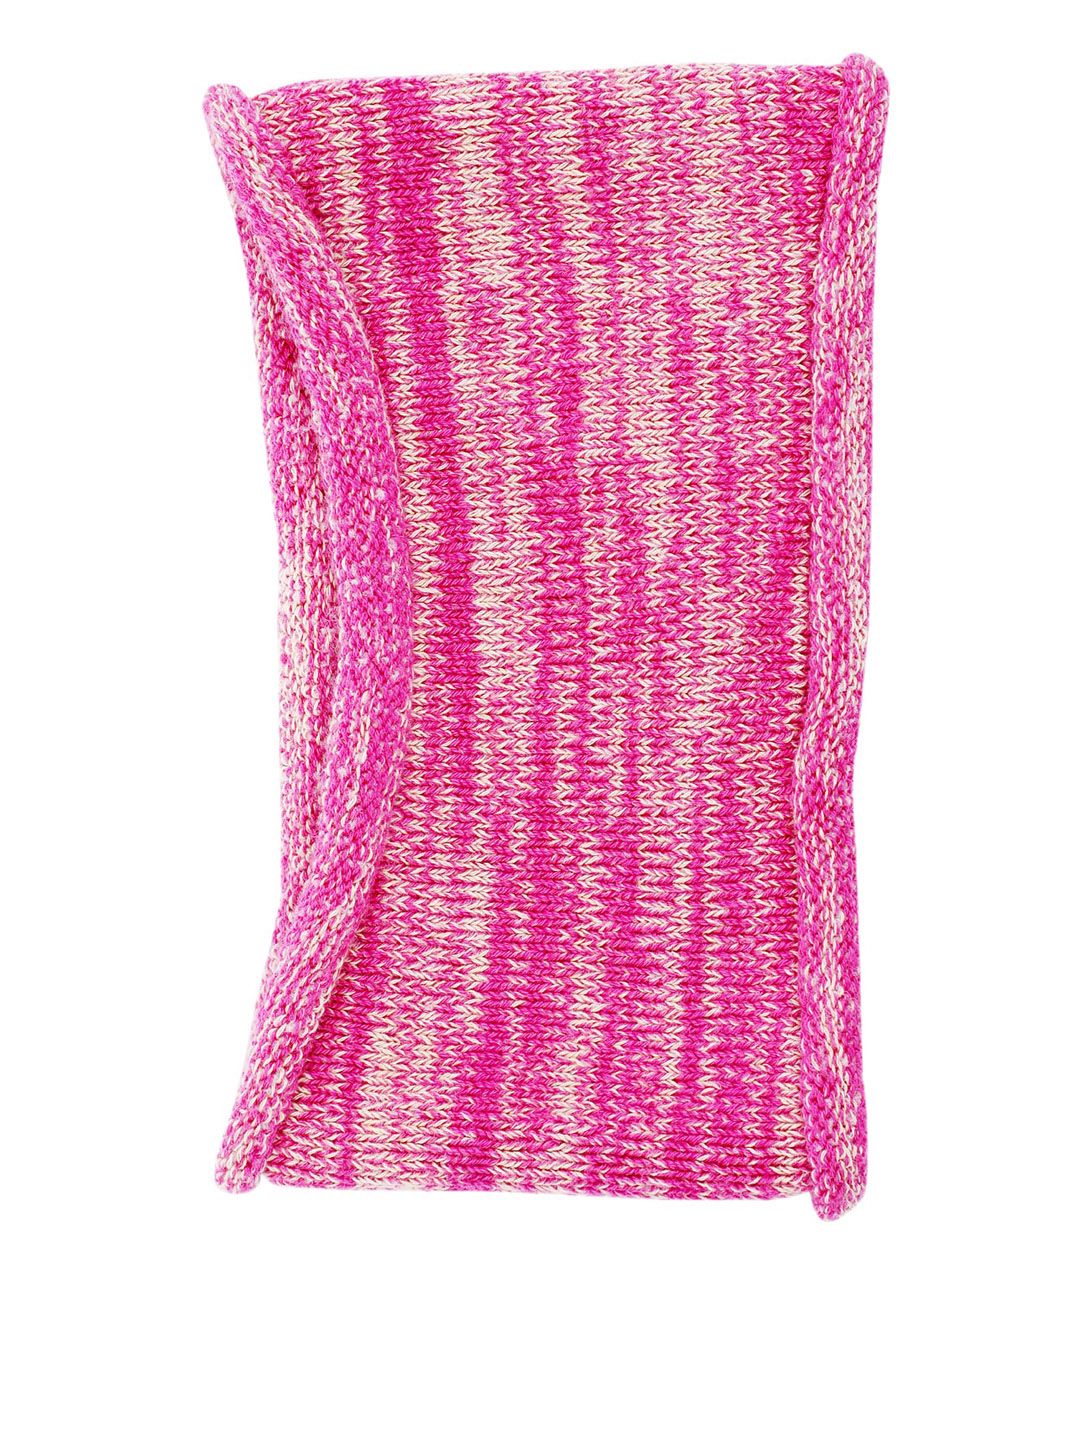 Bharatasya Pink Sports Cotton Super Absorbent Sweatband Price in India